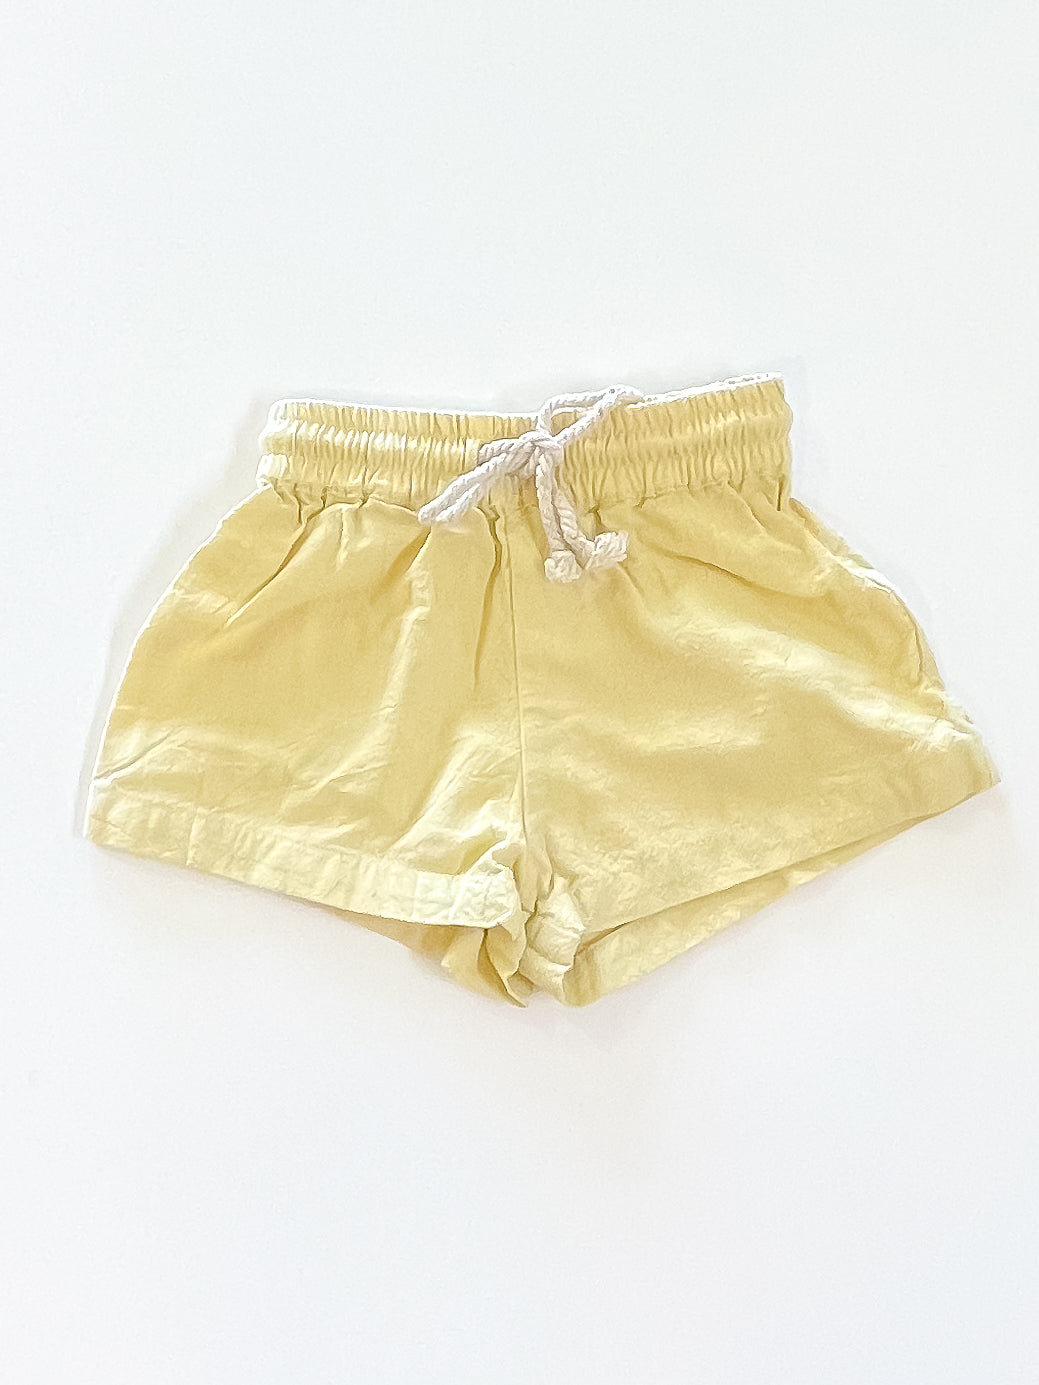 Illoura The Label drawstring shorts (6-12m)